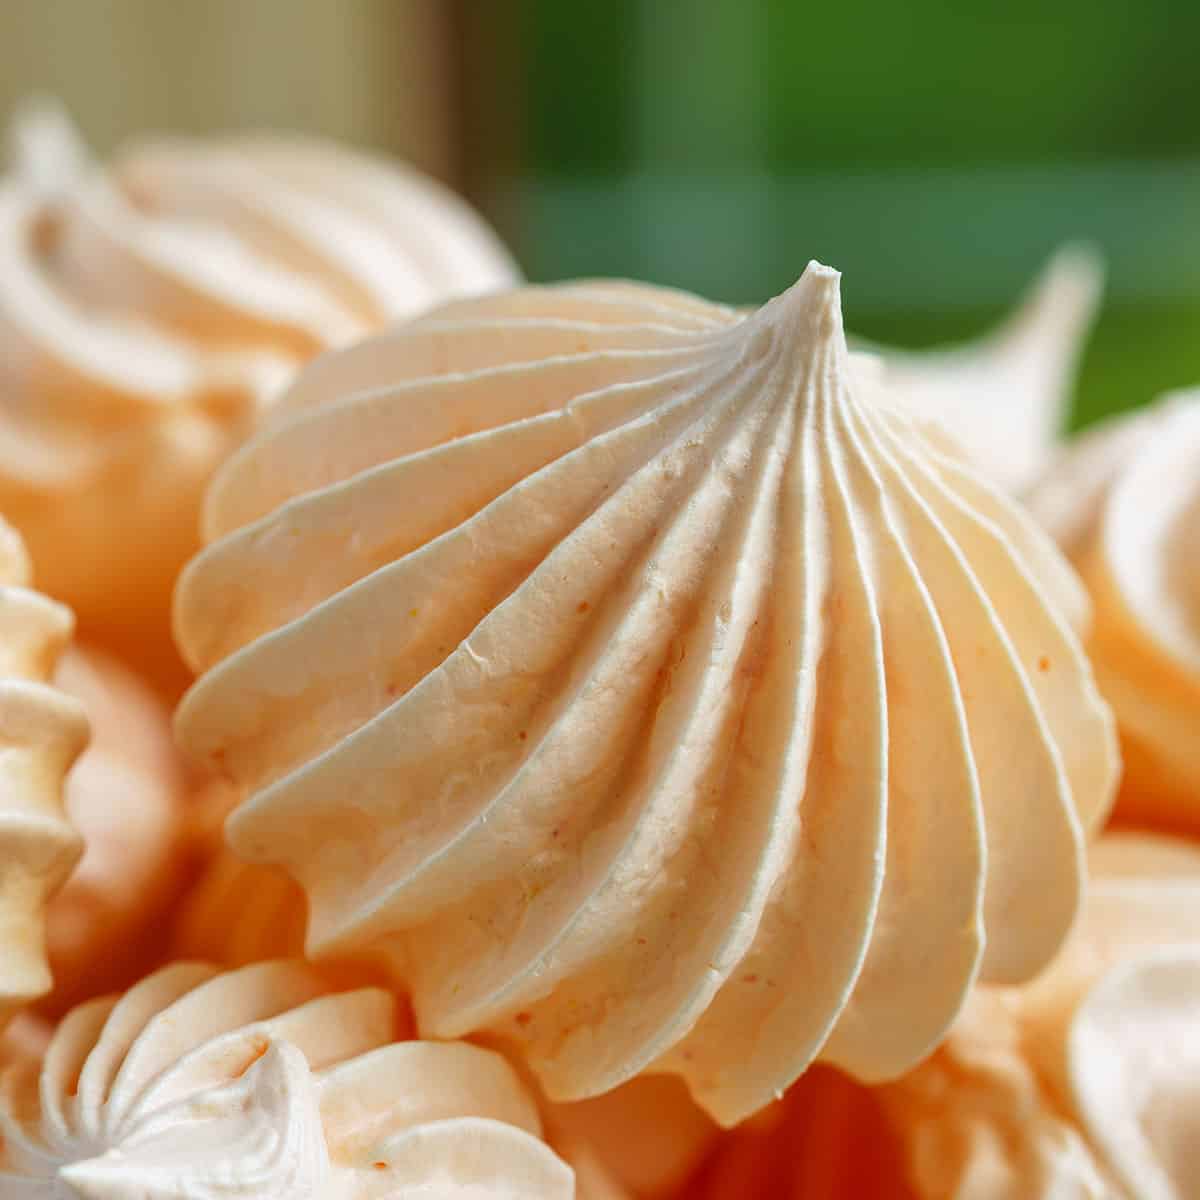 Close up of a single tangerine meringue cookie.